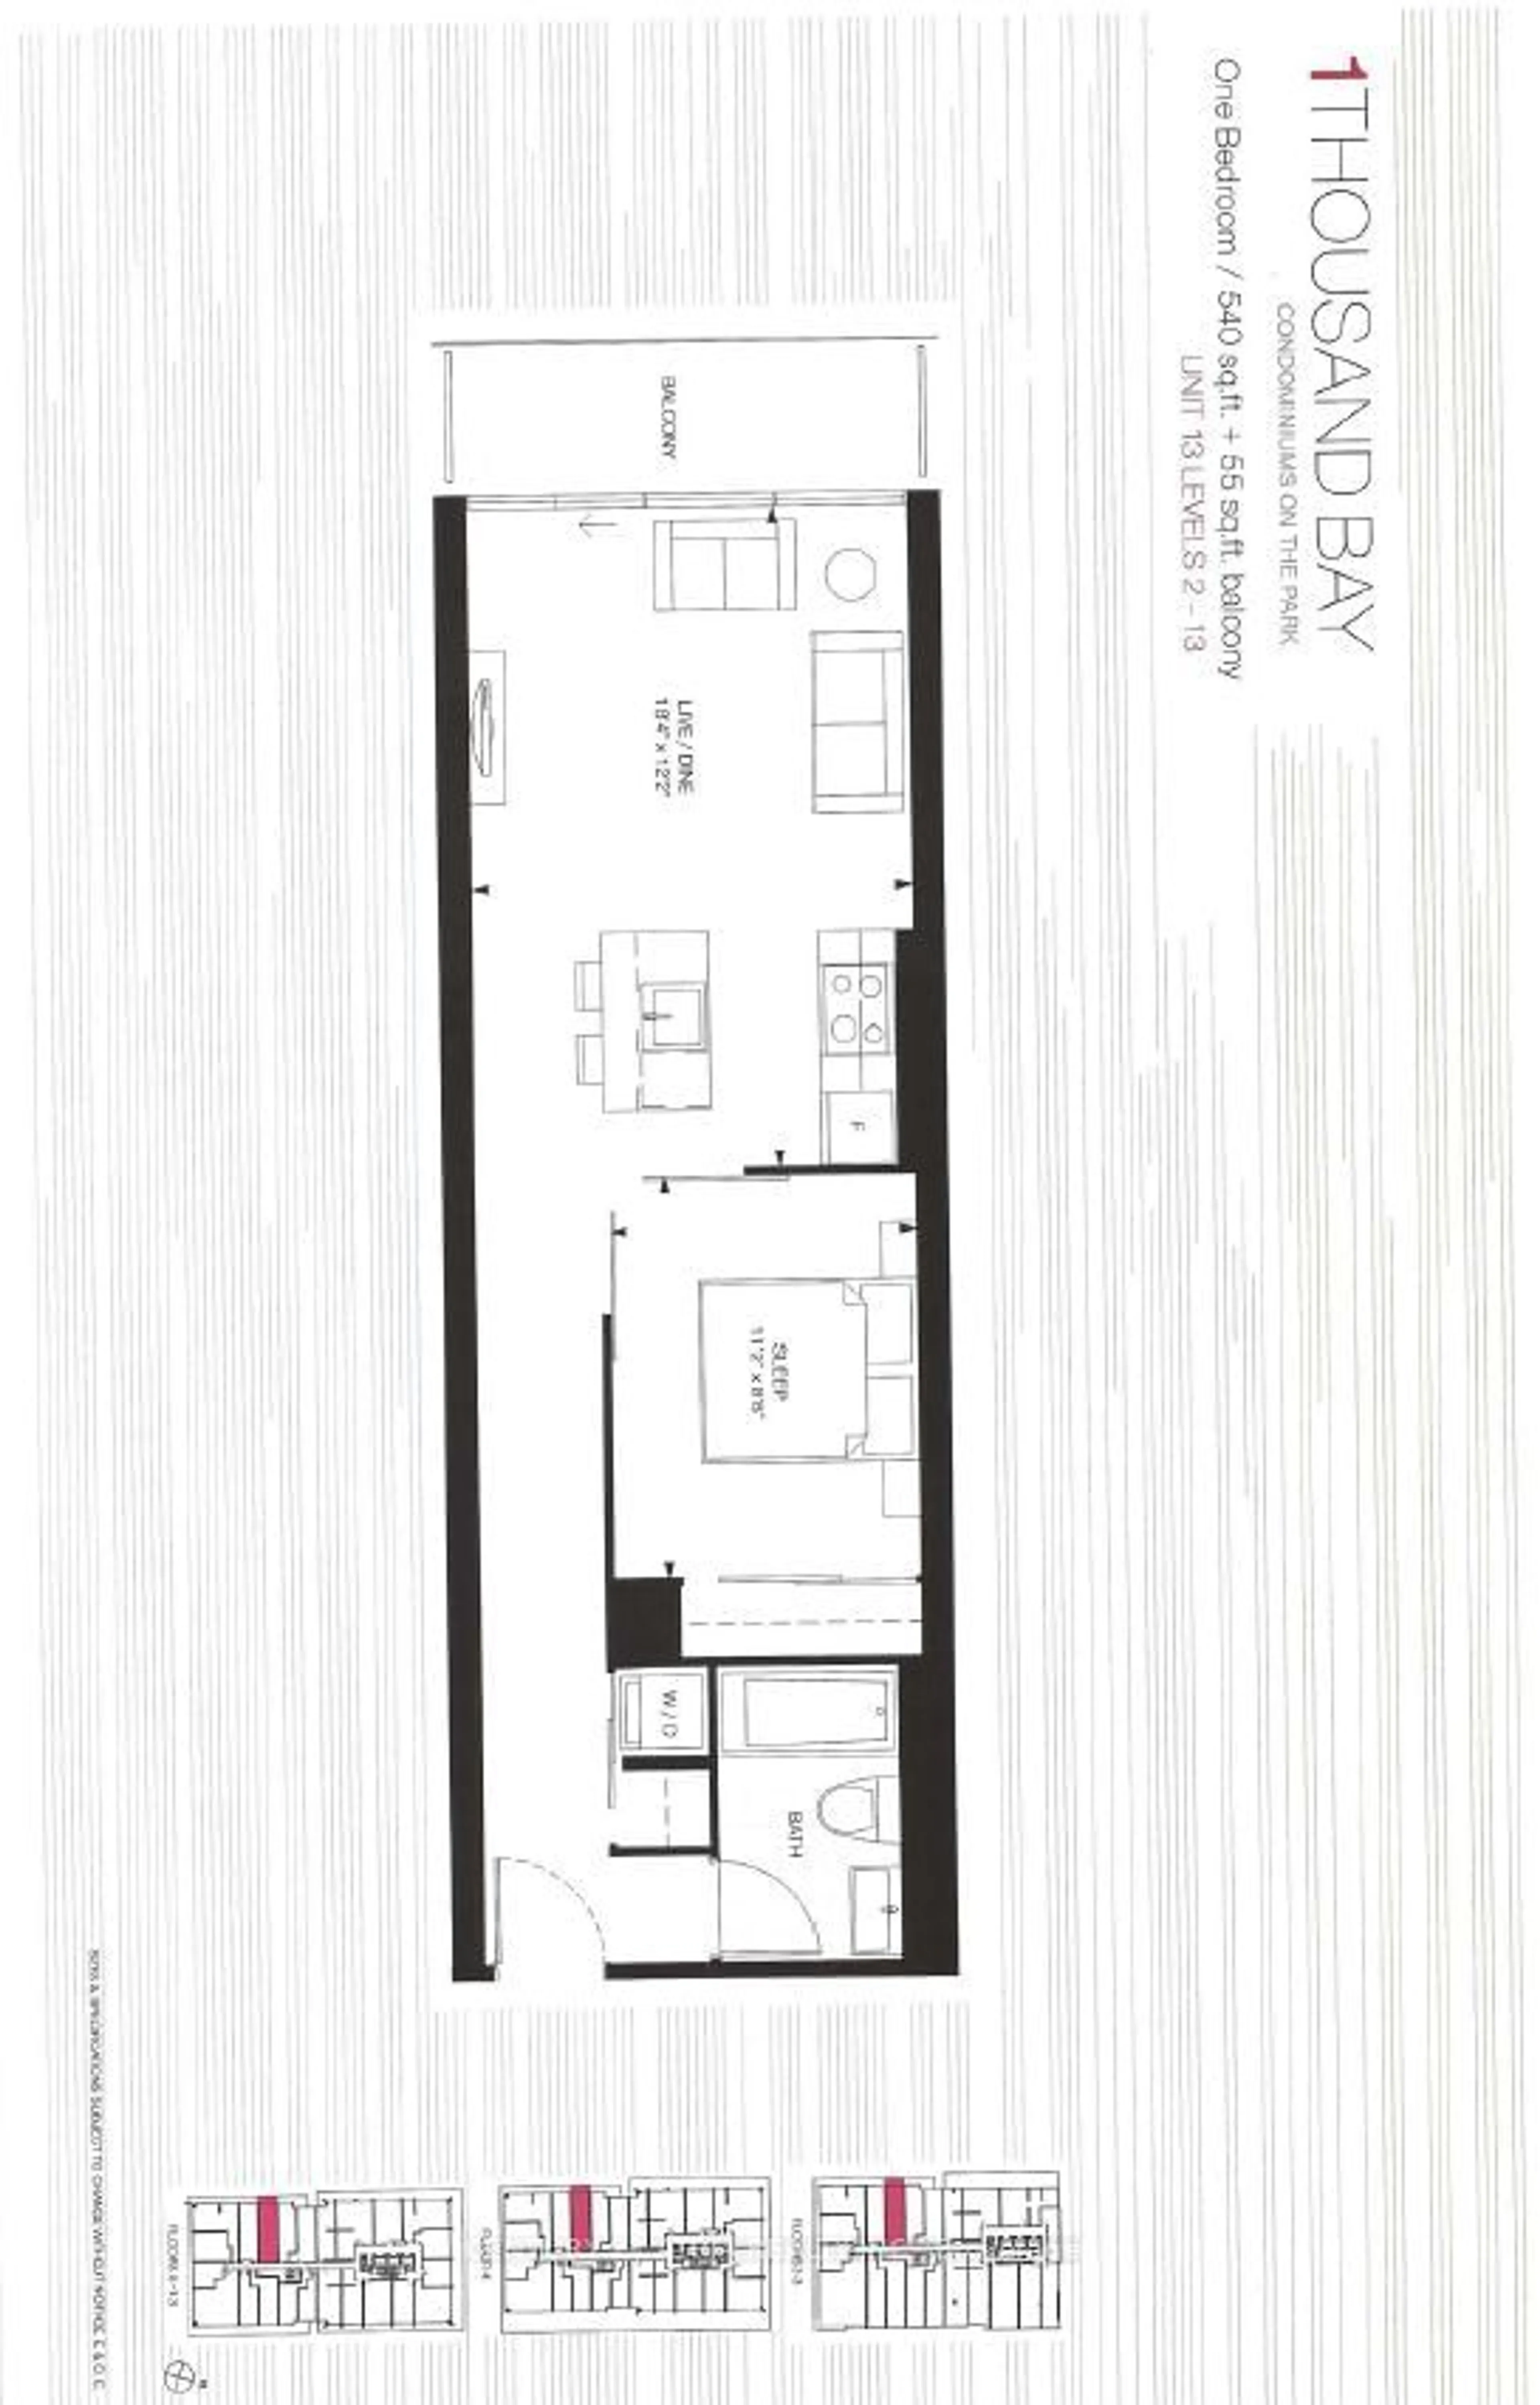 Floor plan for 57 St Joseph St #1213, Toronto Ontario M5S 0C5